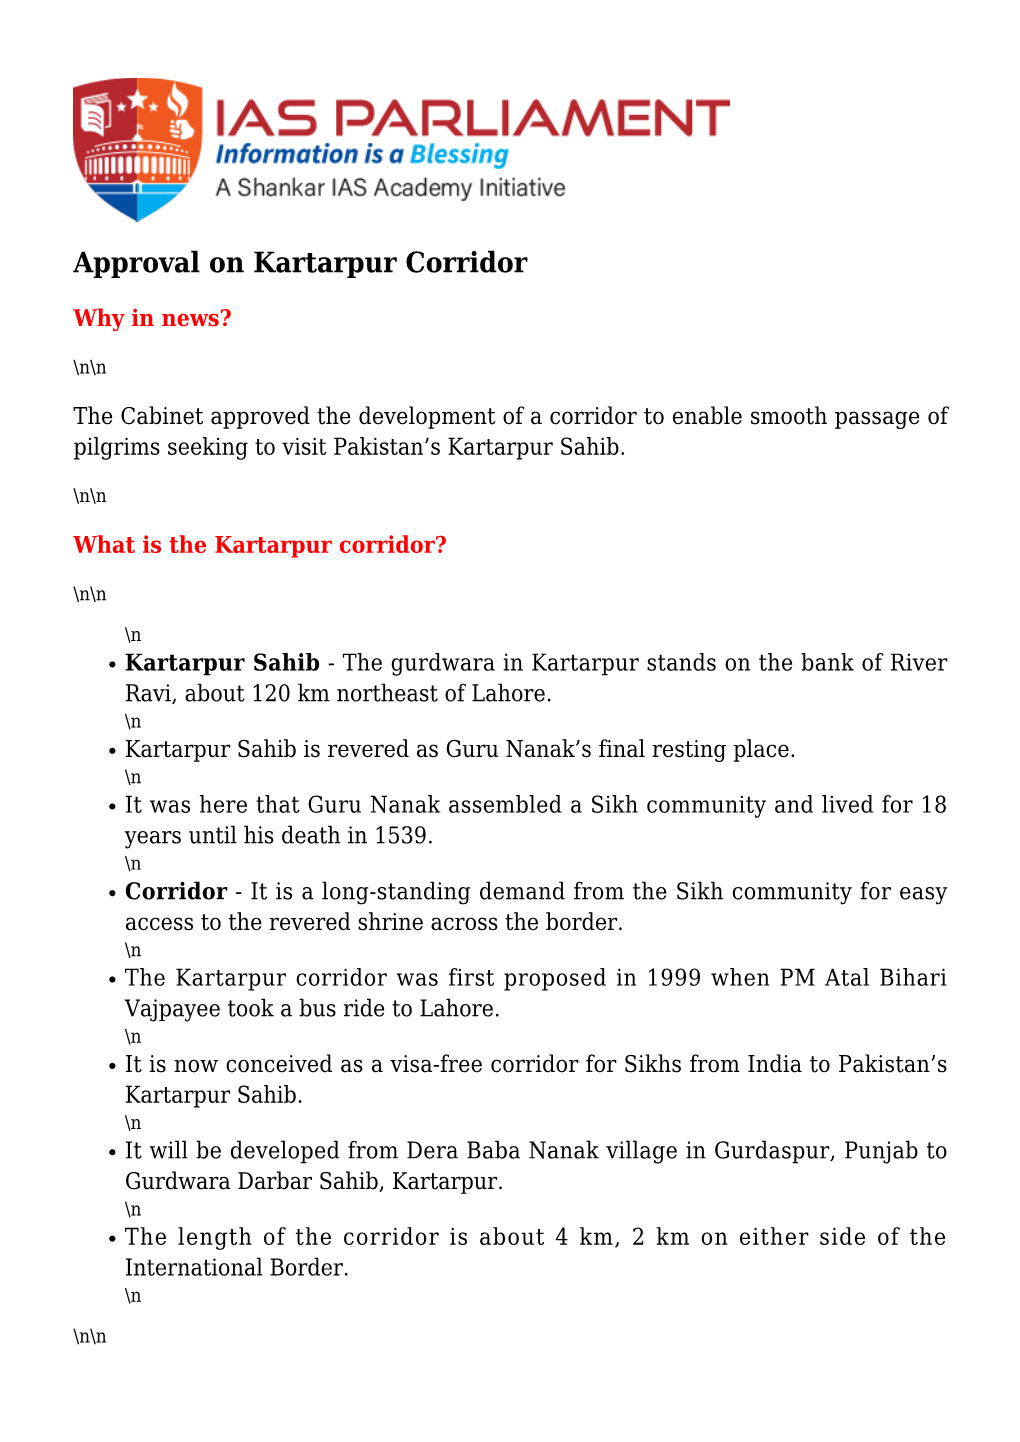 Approval on Kartarpur Corridor